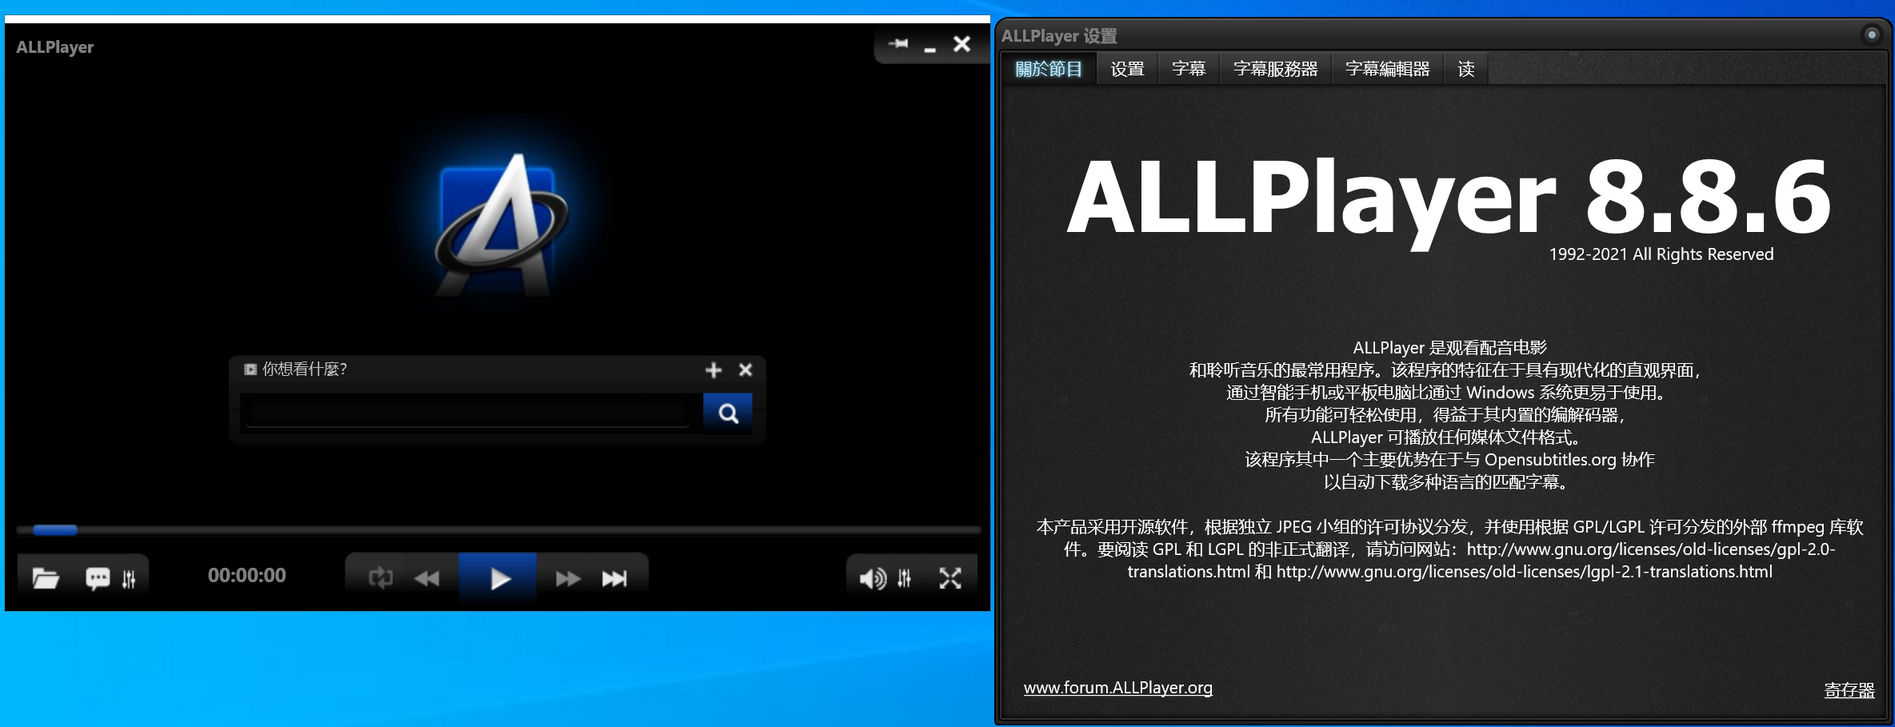 AllPlayer 8.8.6 - 功能全面媒体播放器